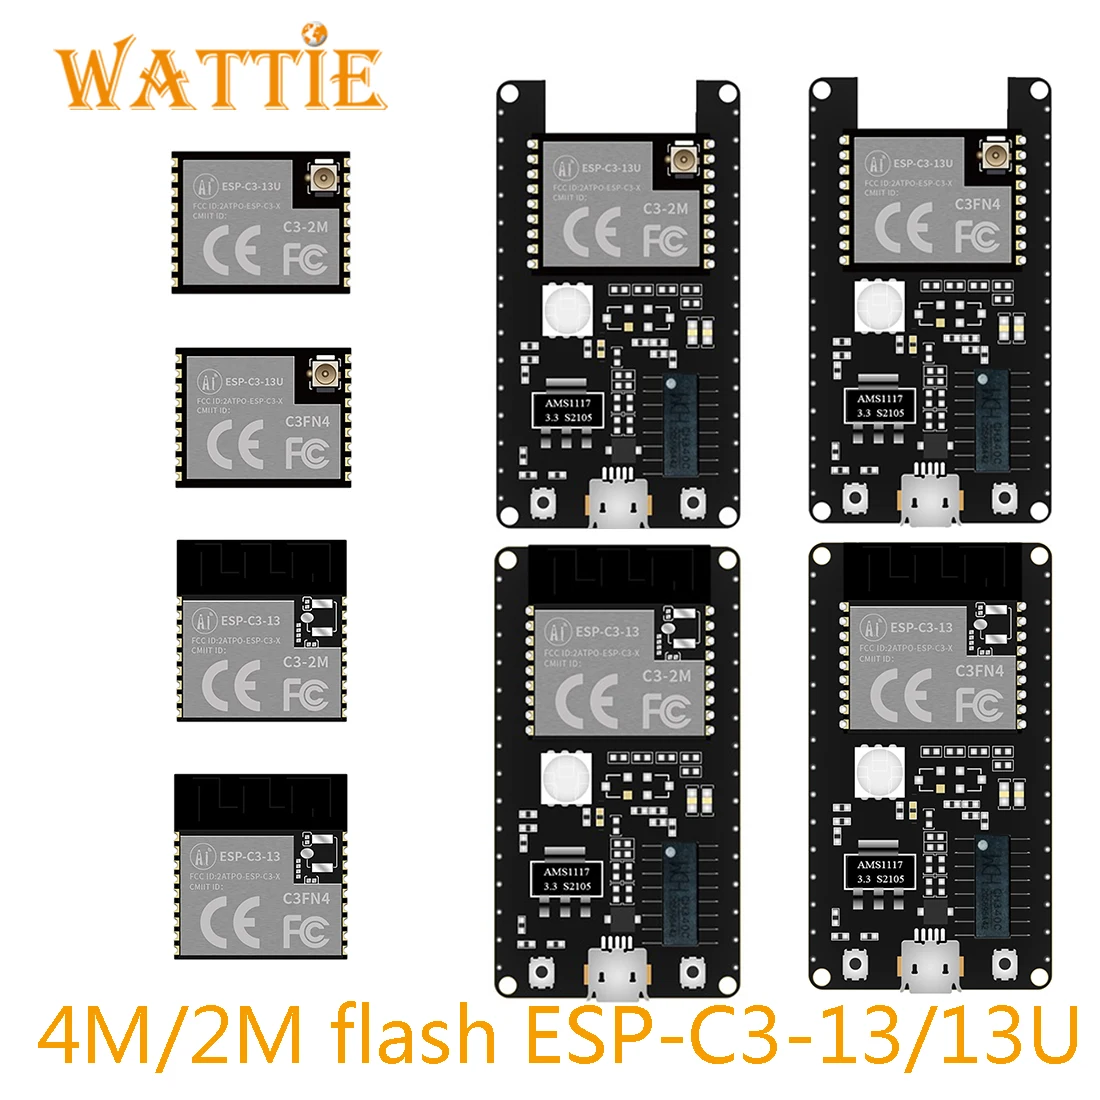 ESP-C3-13 KIT Esp32-C3 C3-13 4M 2M flash ESP-C3 ESP C3 Esp32-C3-13 13  ESP-C3-13U C3-13U Esp32-C3-13U 13U WiFi+Bluetooth 5.0 esp32 s3 hmi 8m psram 16m flash for arduino lvgl wifi